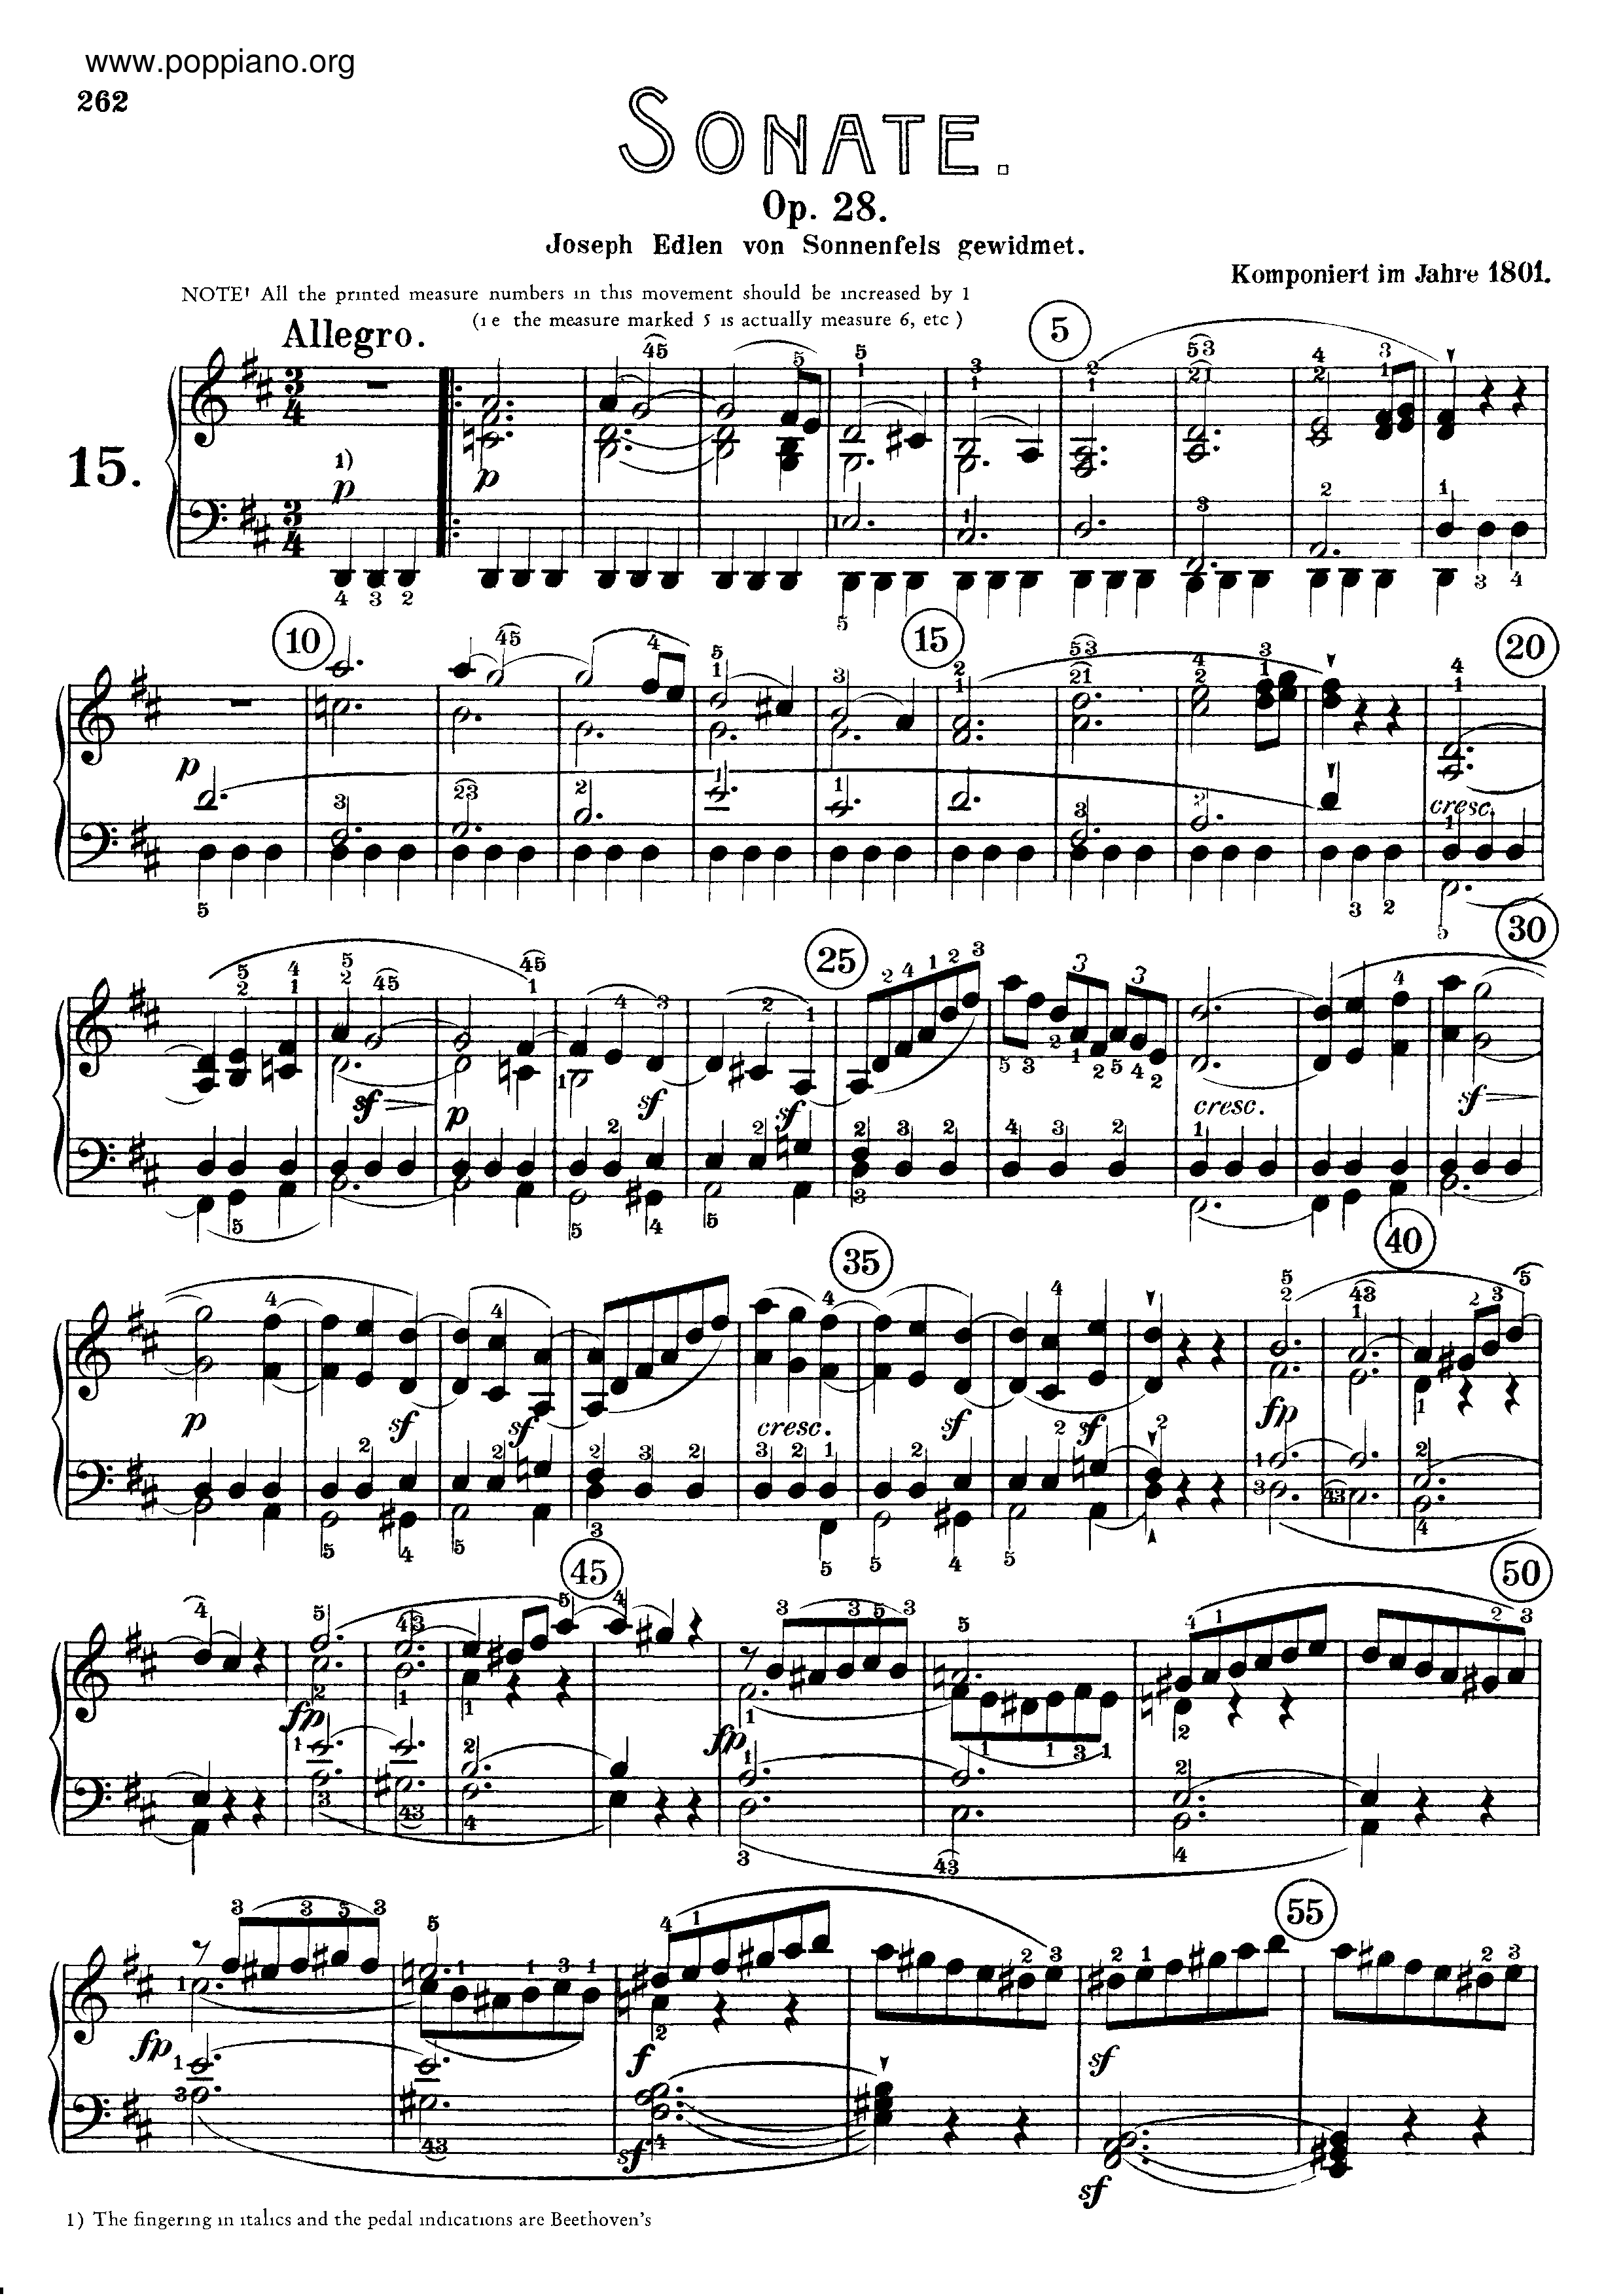 Sonata No. 15 in D majorピアノ譜